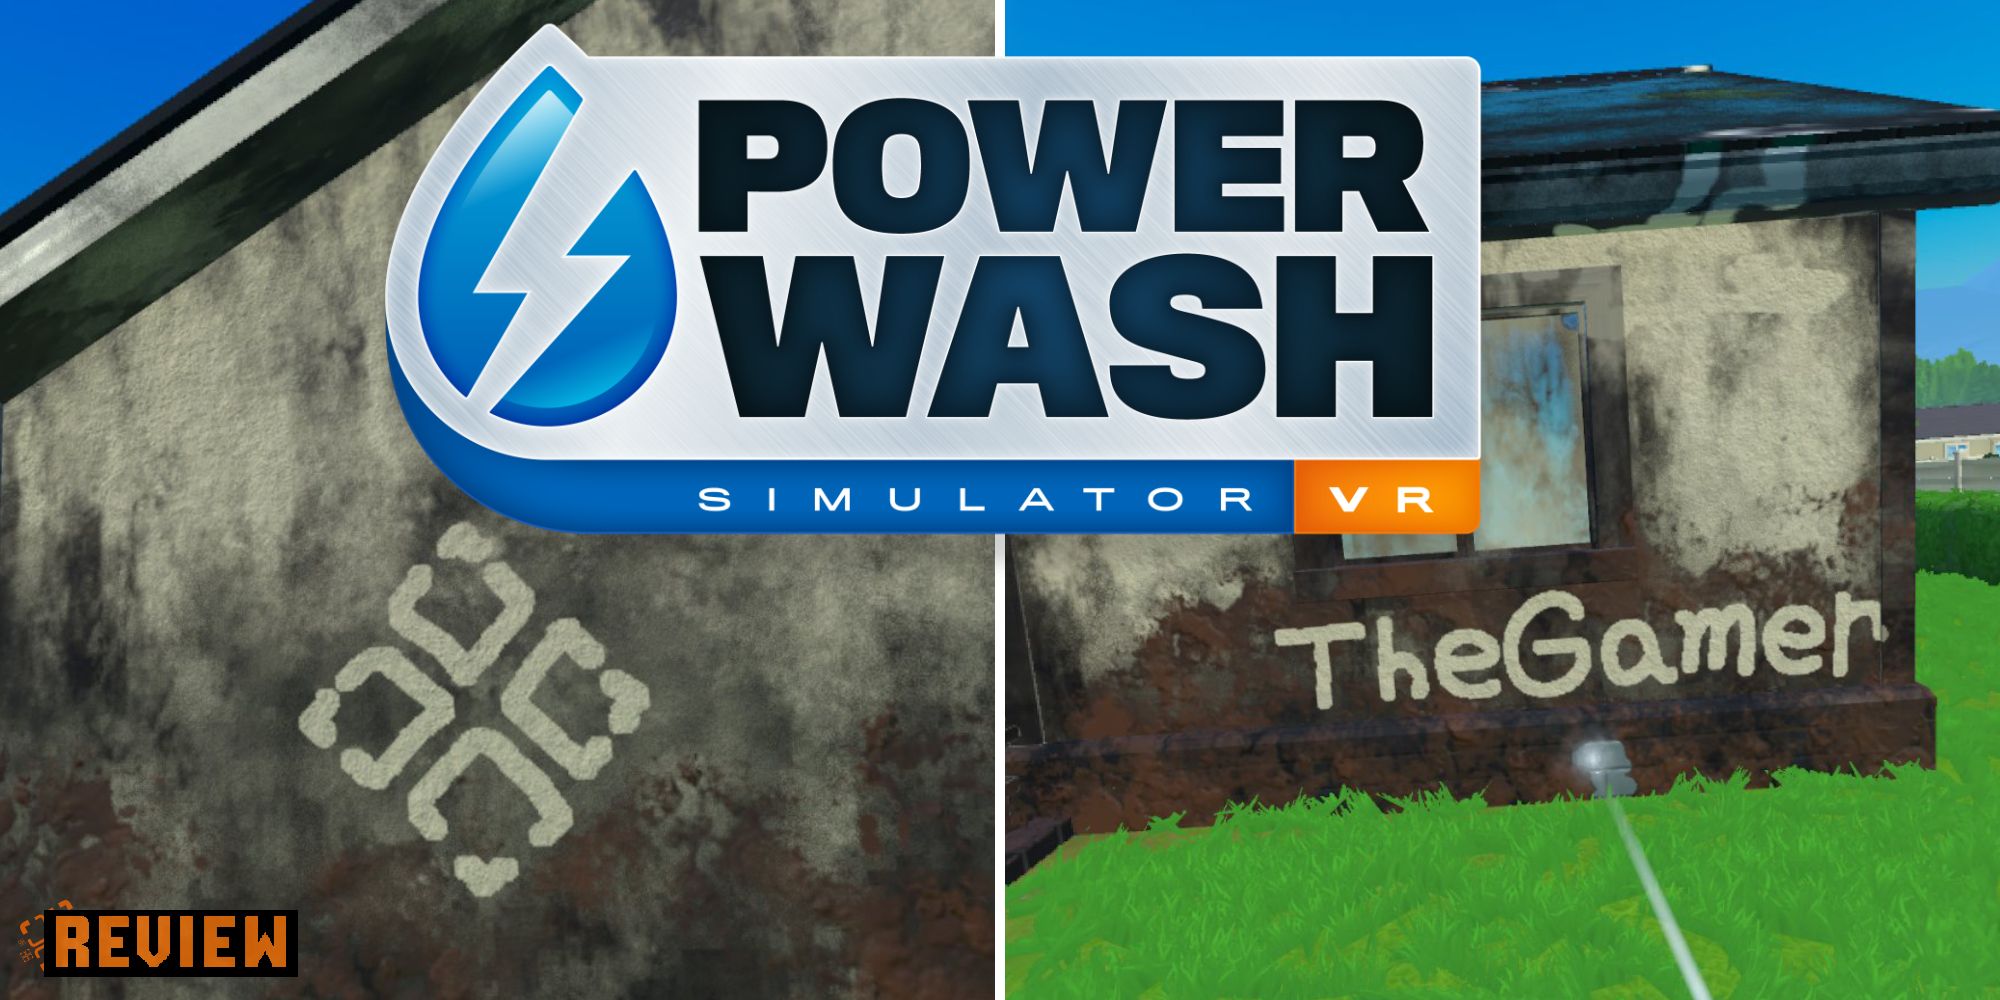 PowerWash Simulator blasts onto VR in November